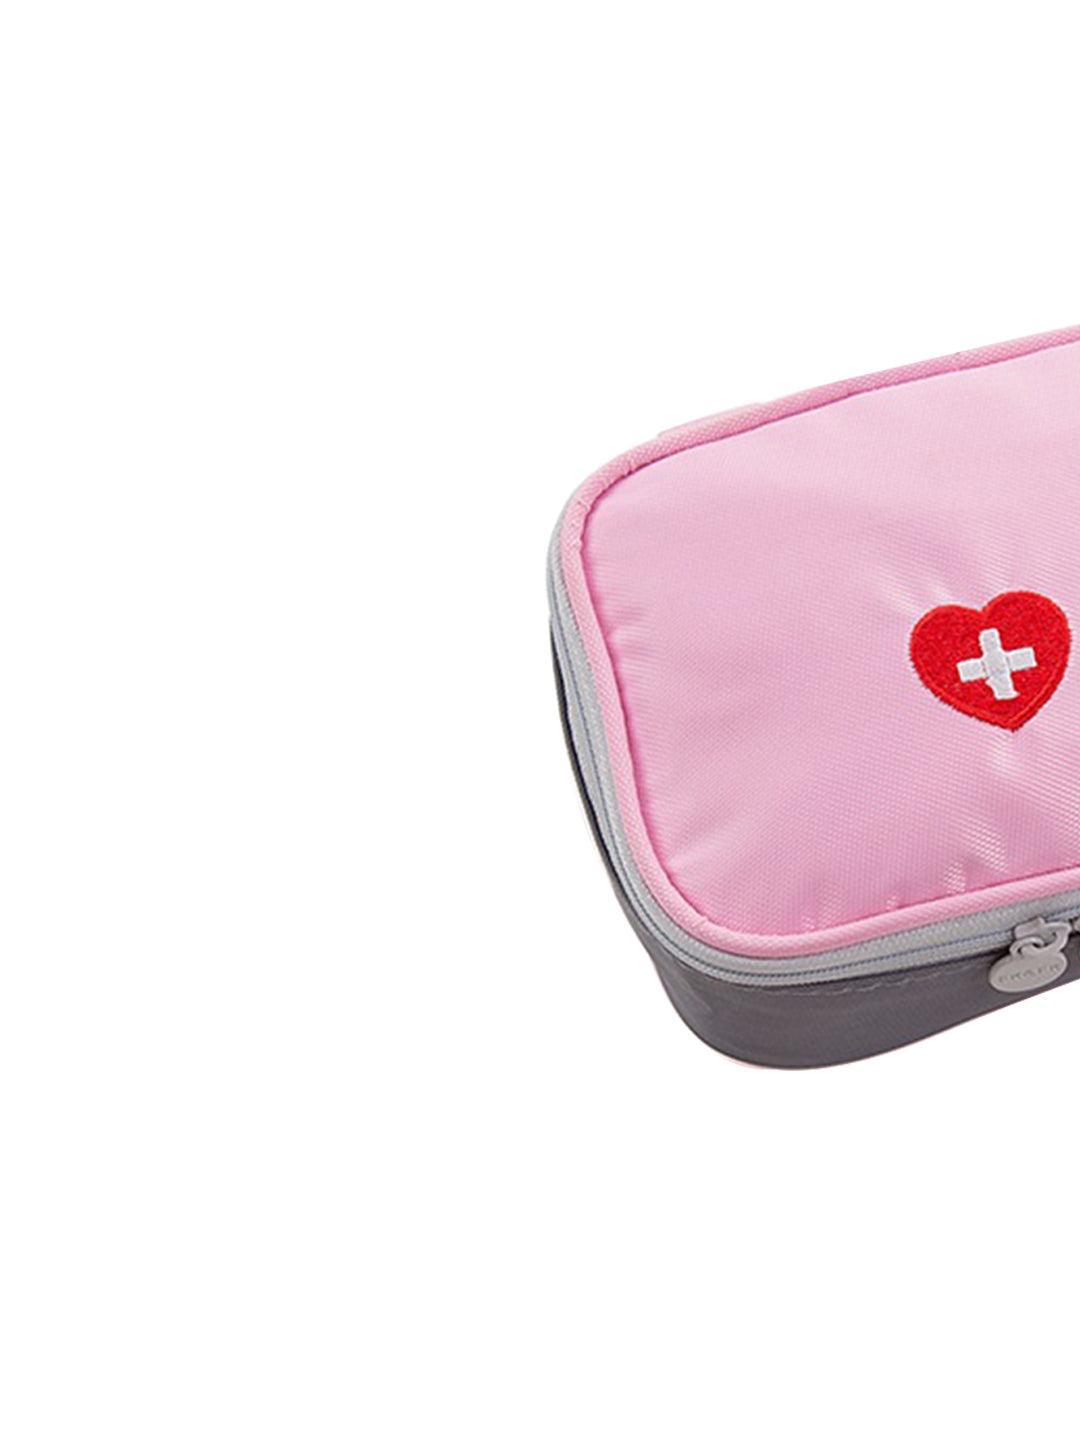 First Aid Organizer Case - Pink | Bag-all